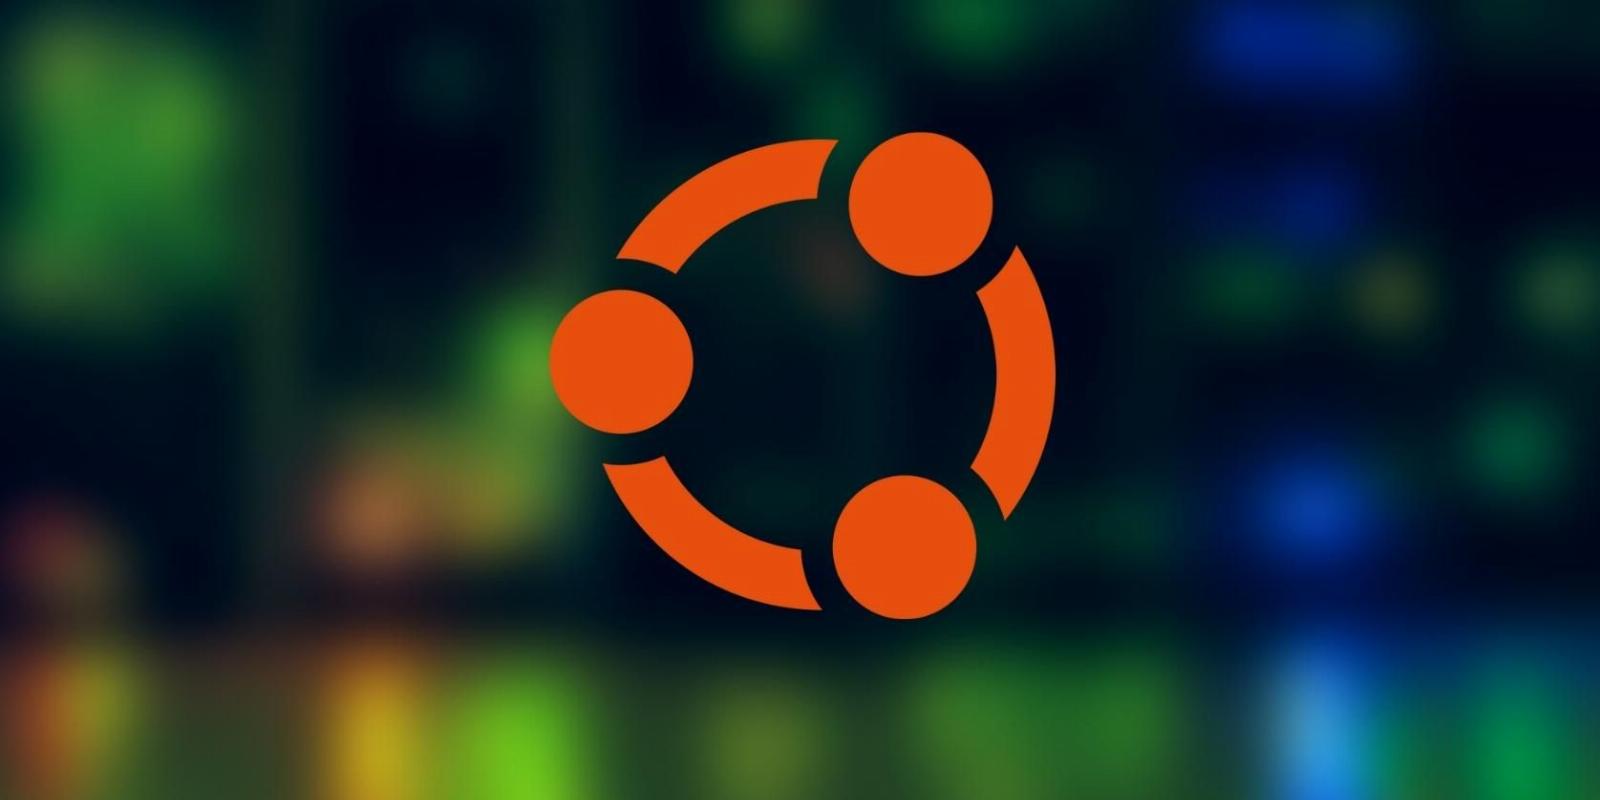 How to Install a Desktop Environment/GUI in Ubuntu Server